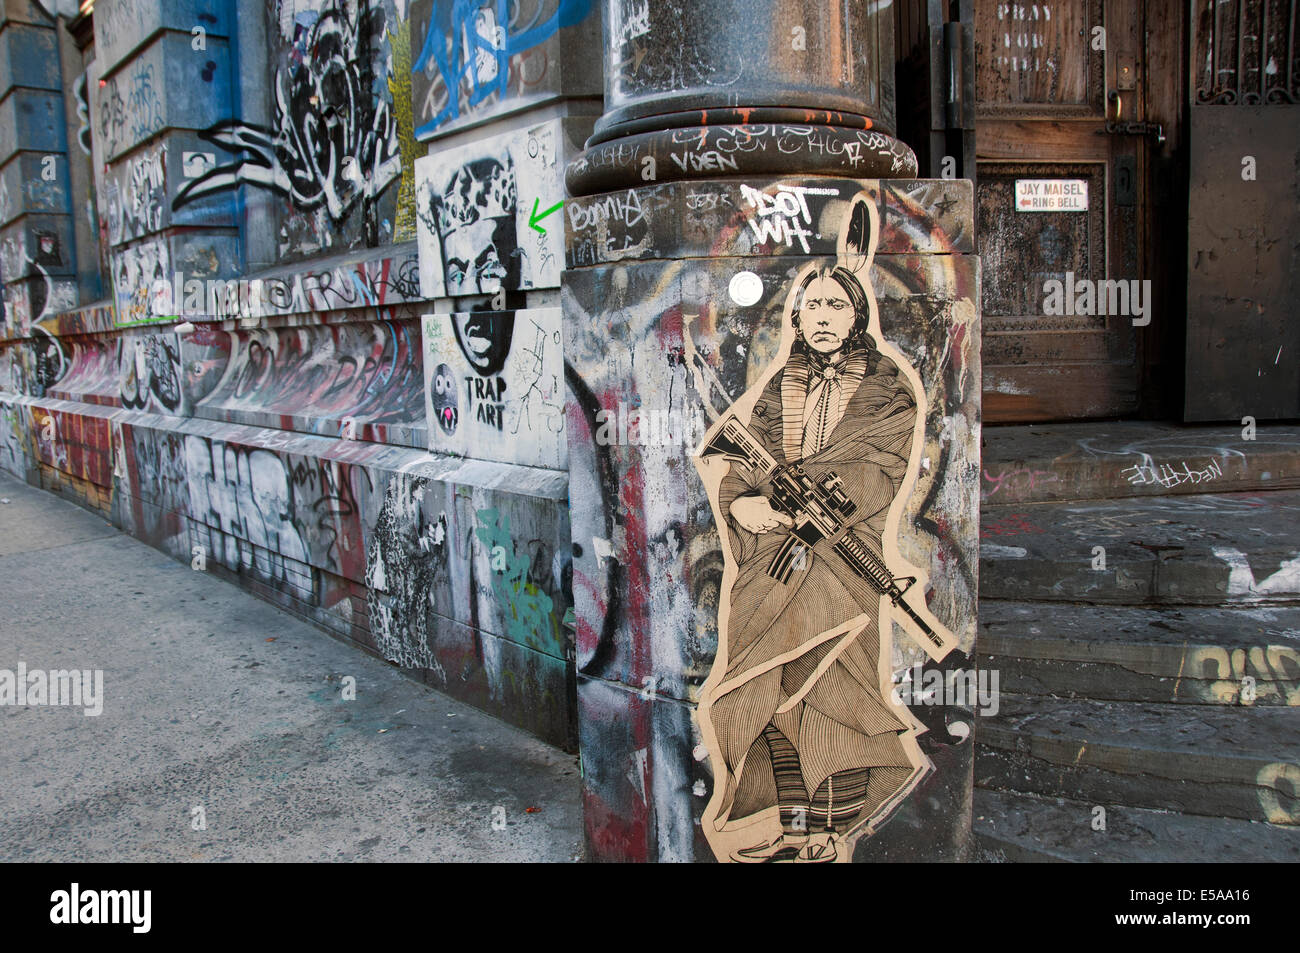 Graffiti art in the Bowery (190 the Bowery) Manhattan NYC Stock Photo